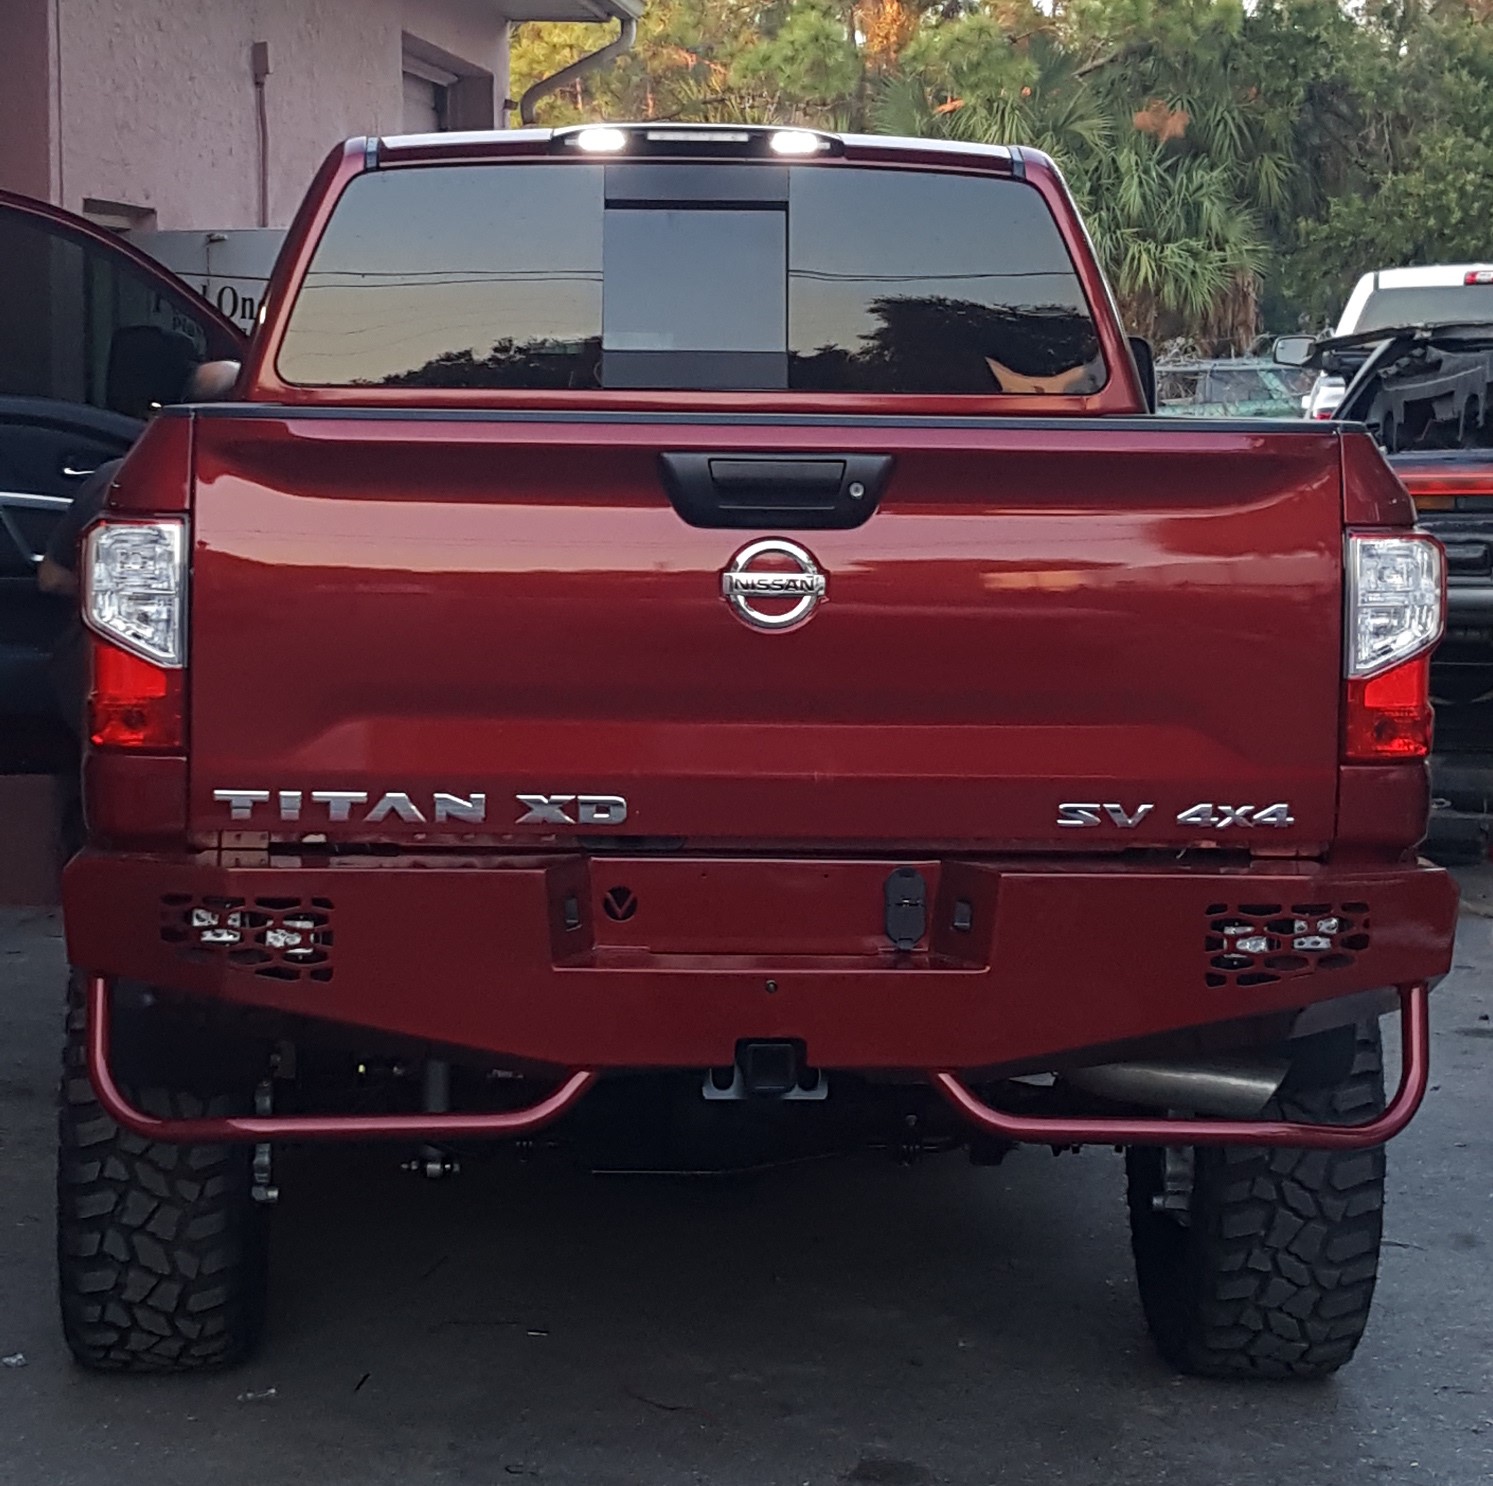 Nissan-Titan-XD-Rear-Bumper-with-Lights-installed.jpg